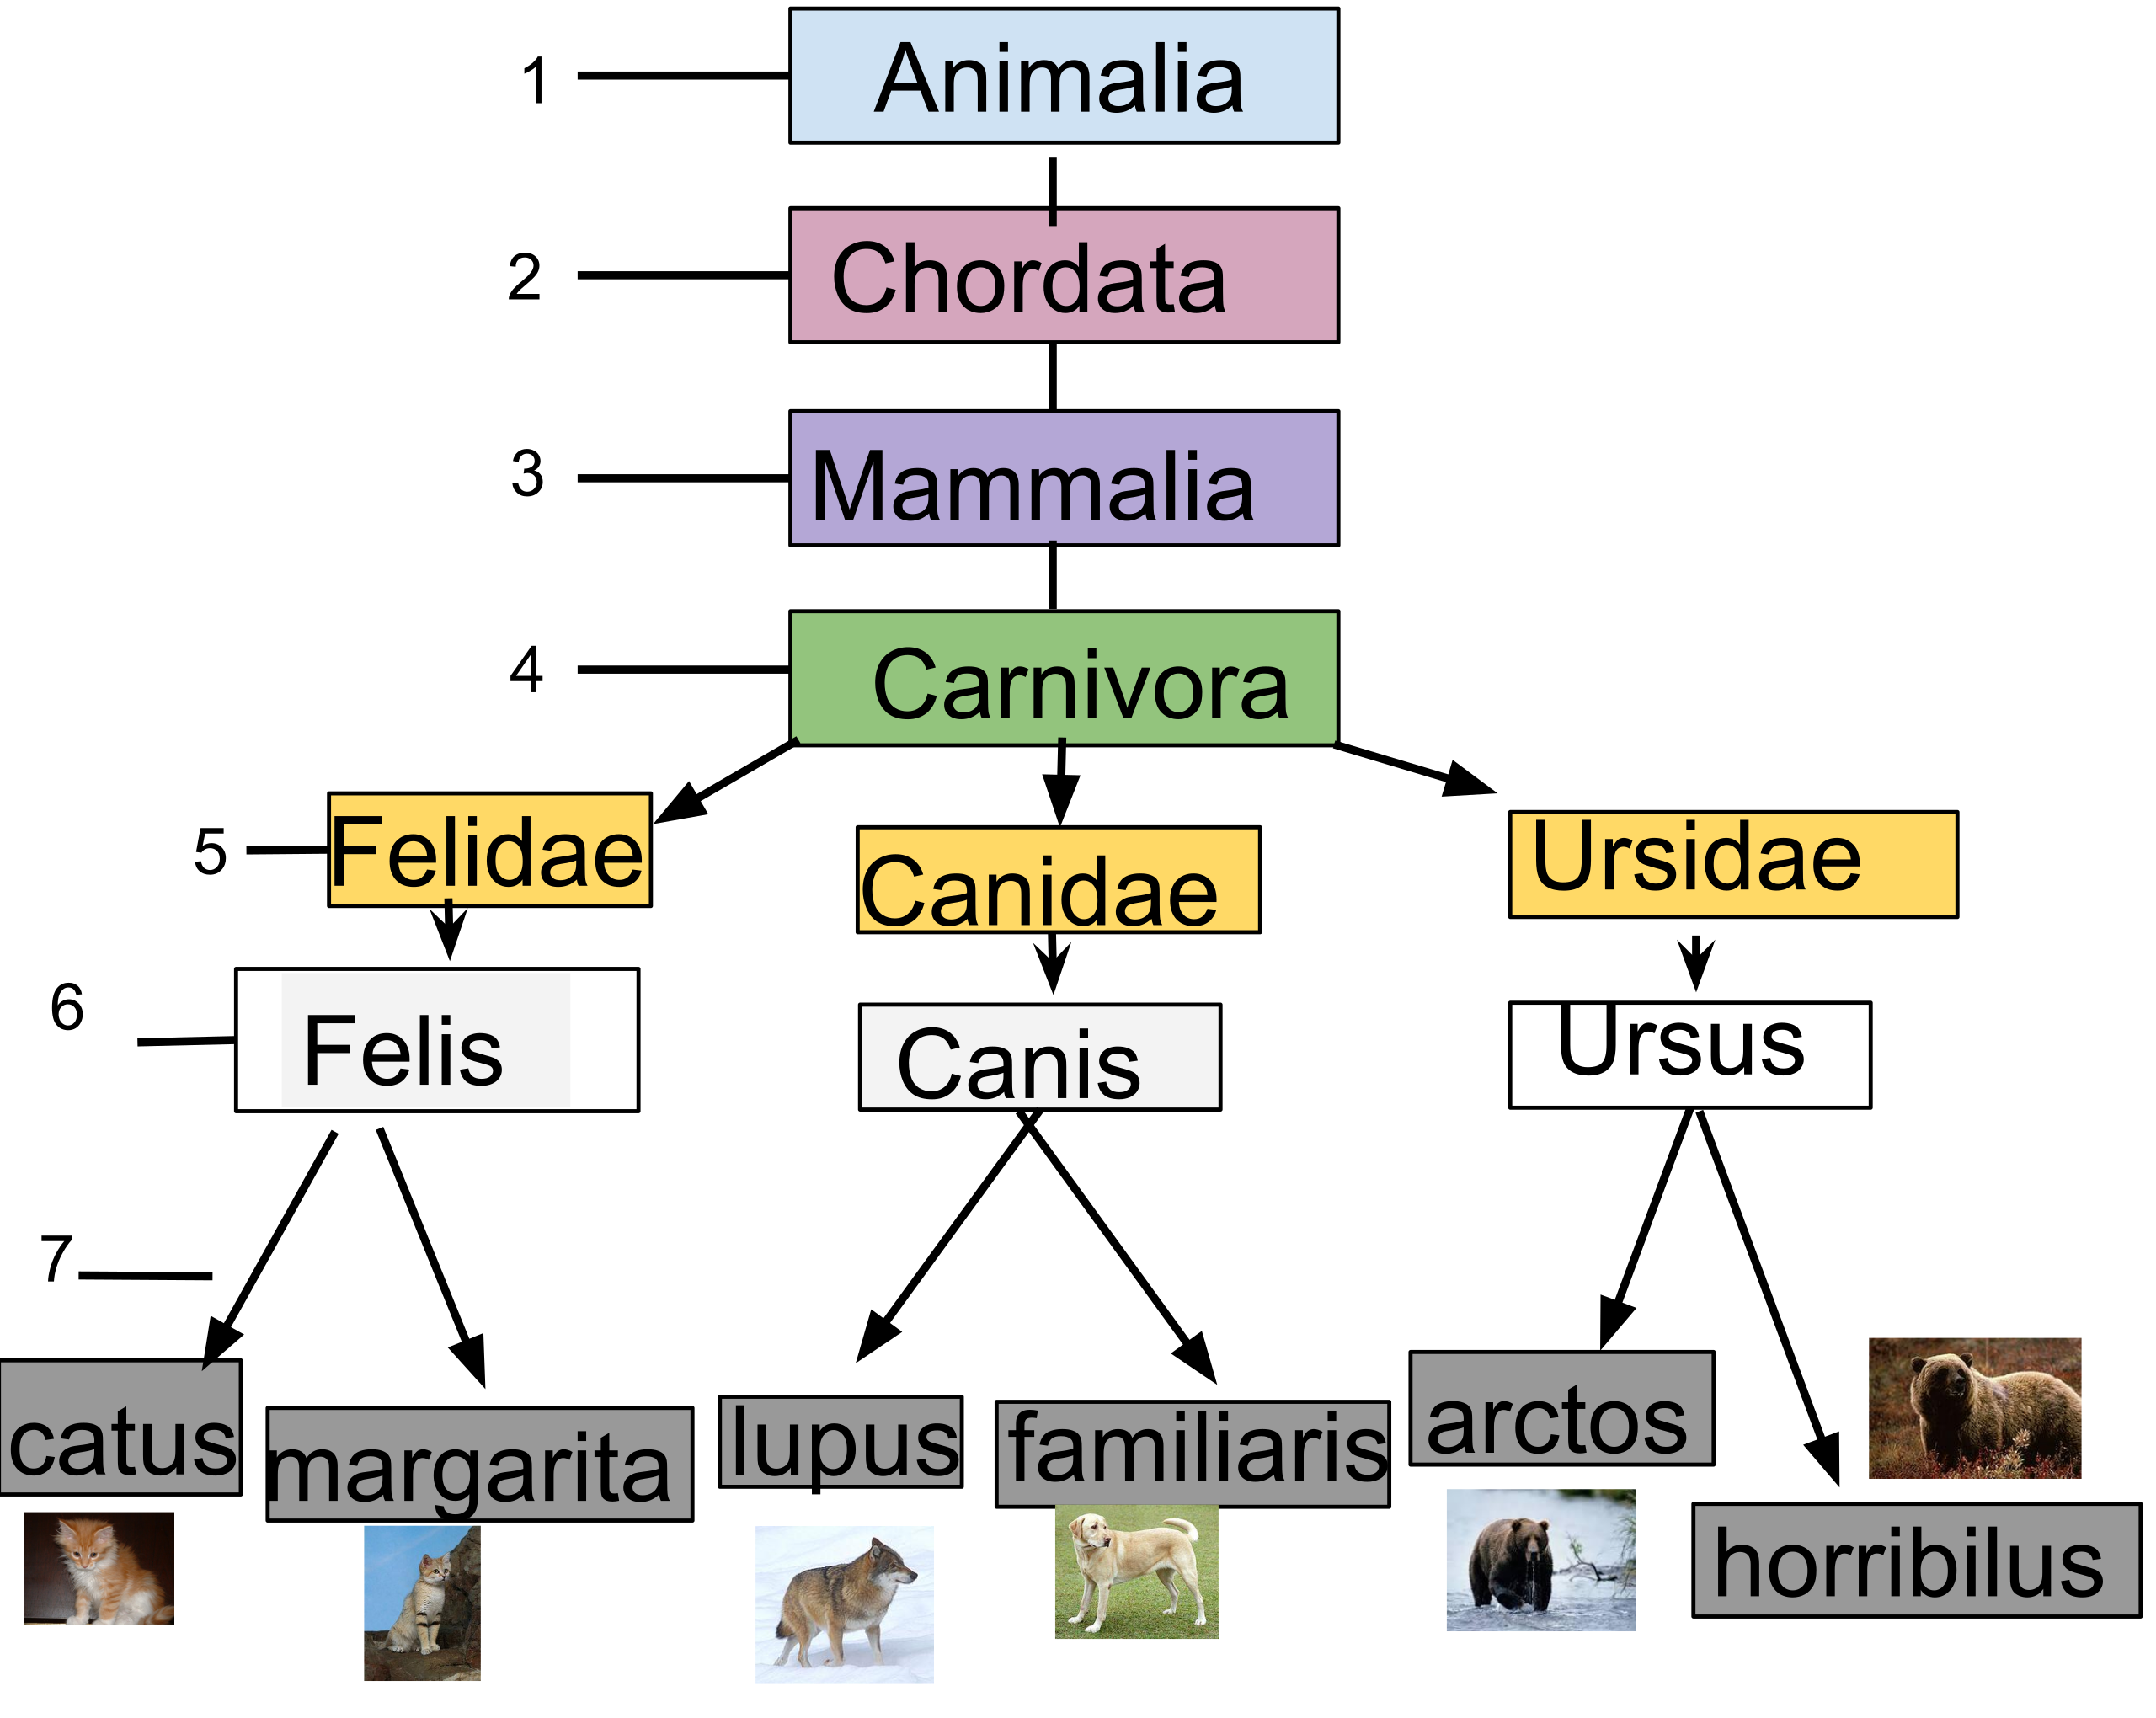 organisms of kingdom animalia